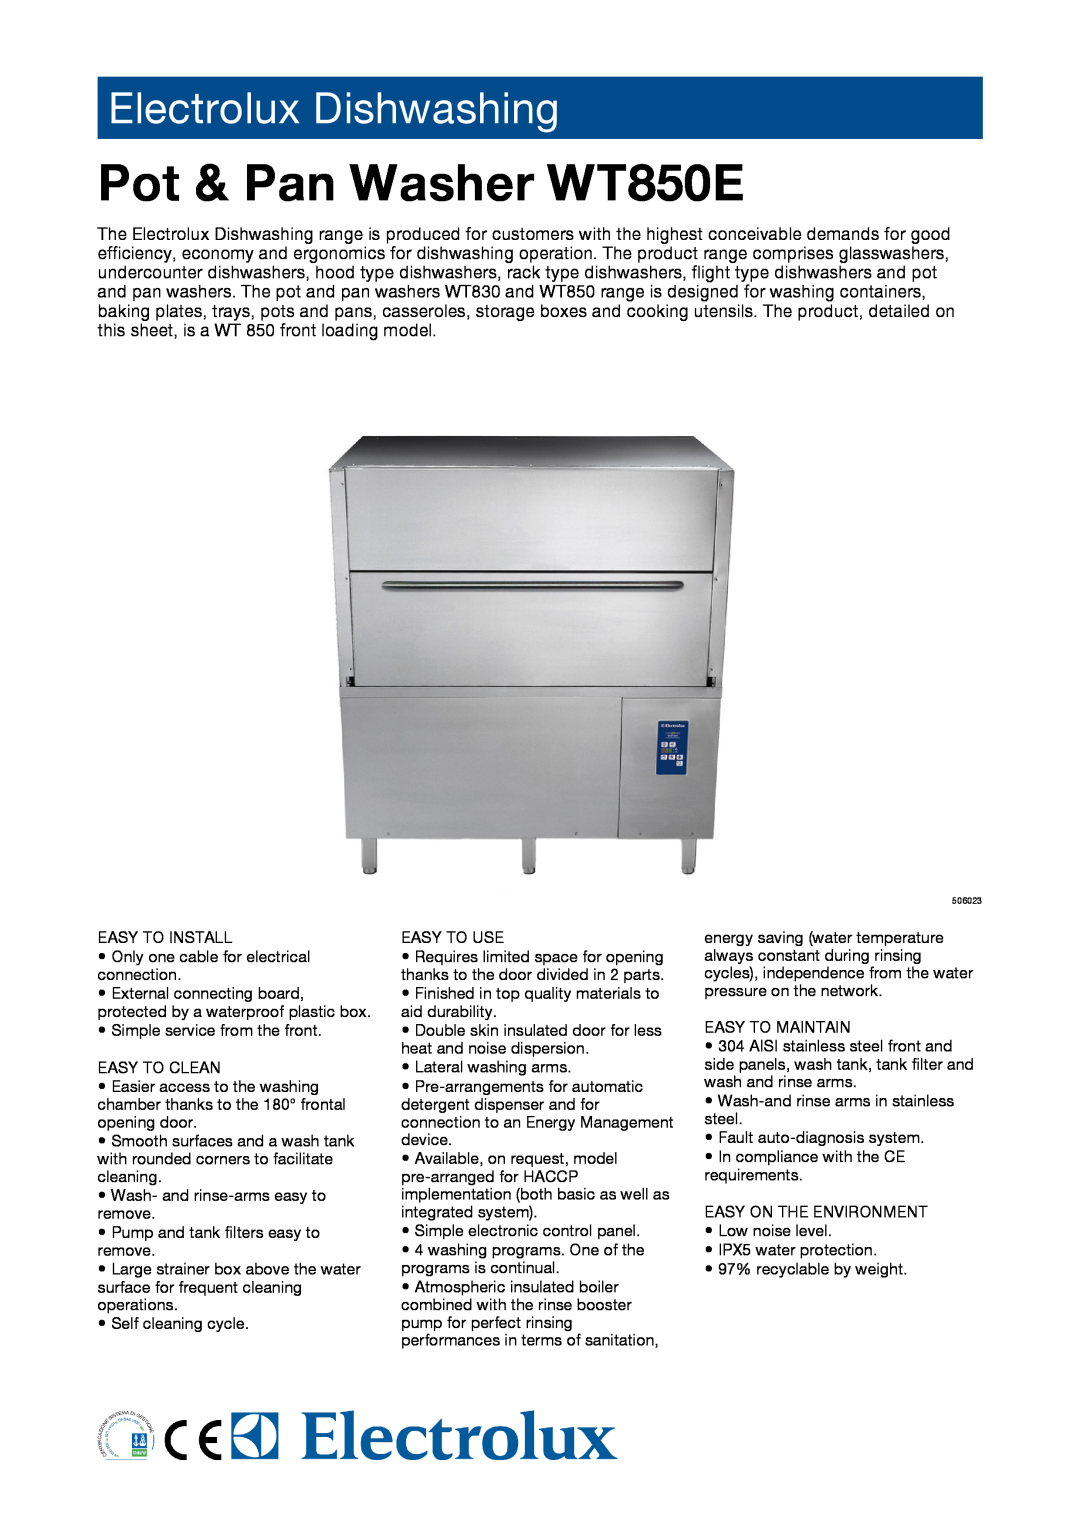 Electrolux manual Pot & Pan Washer WT850E, Electrolux Dishwashing 